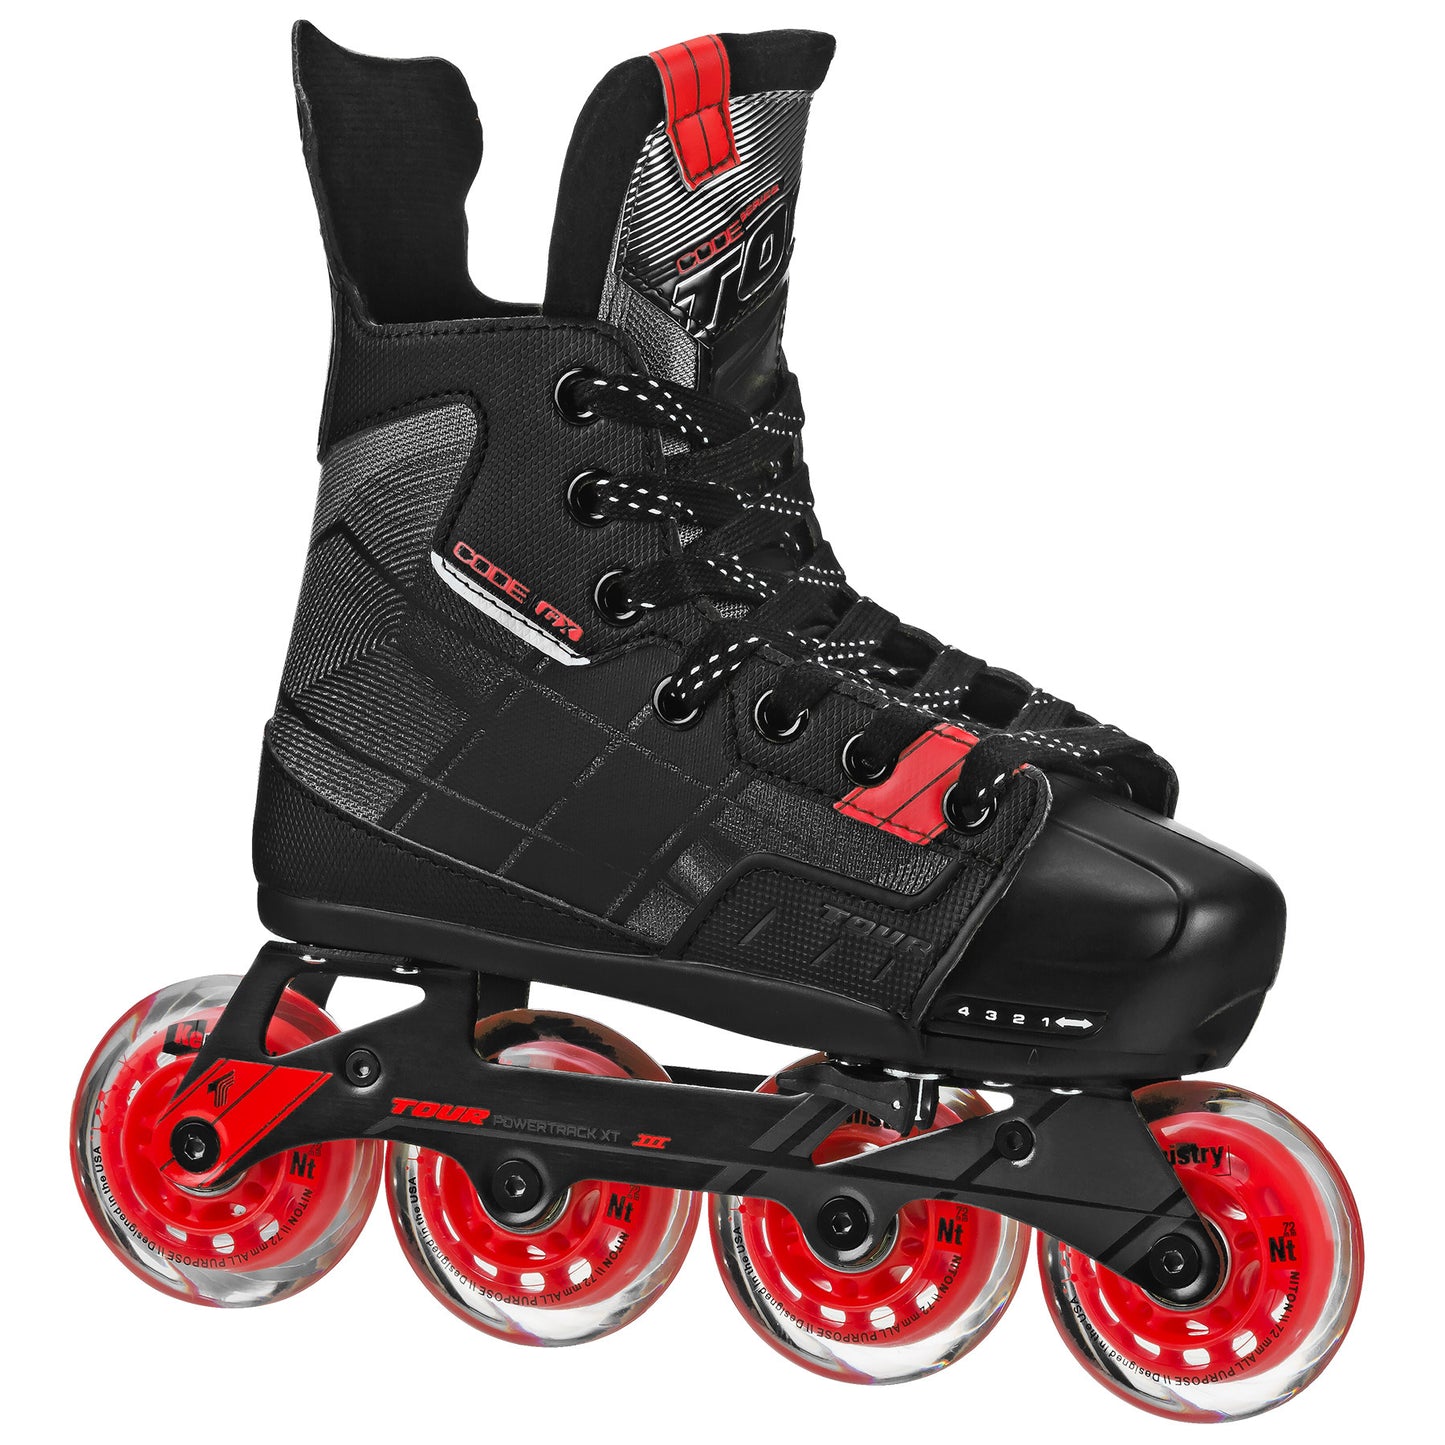 Code GX Youth Adjustable Roller Hockey Skates